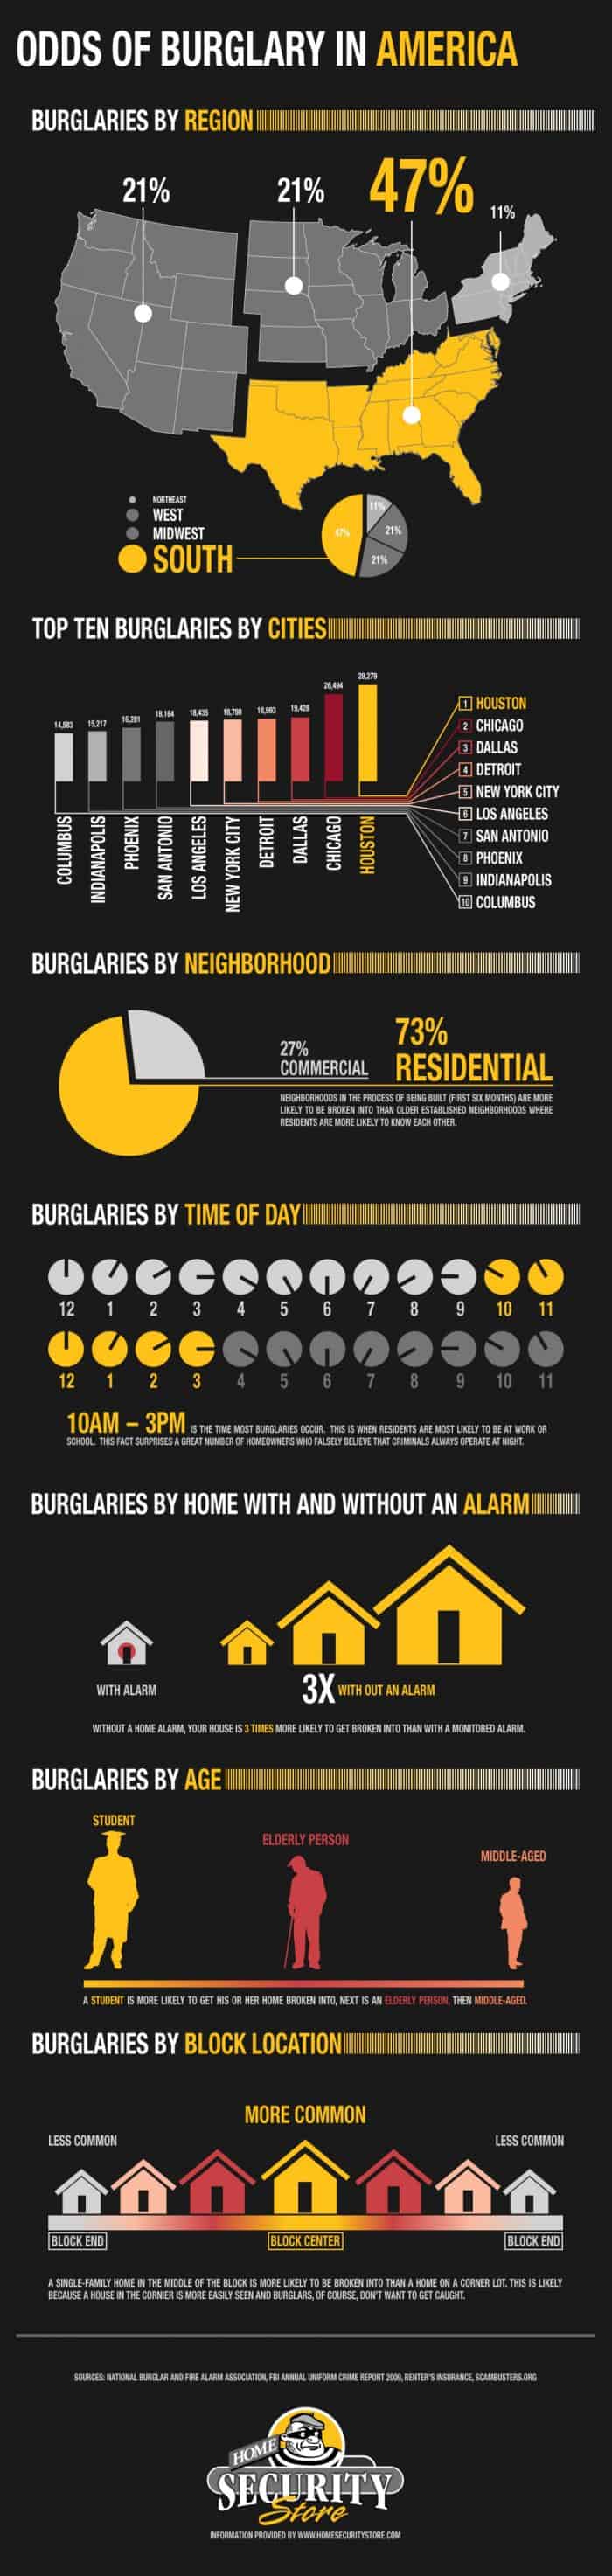 Odds of burglary in america infographic